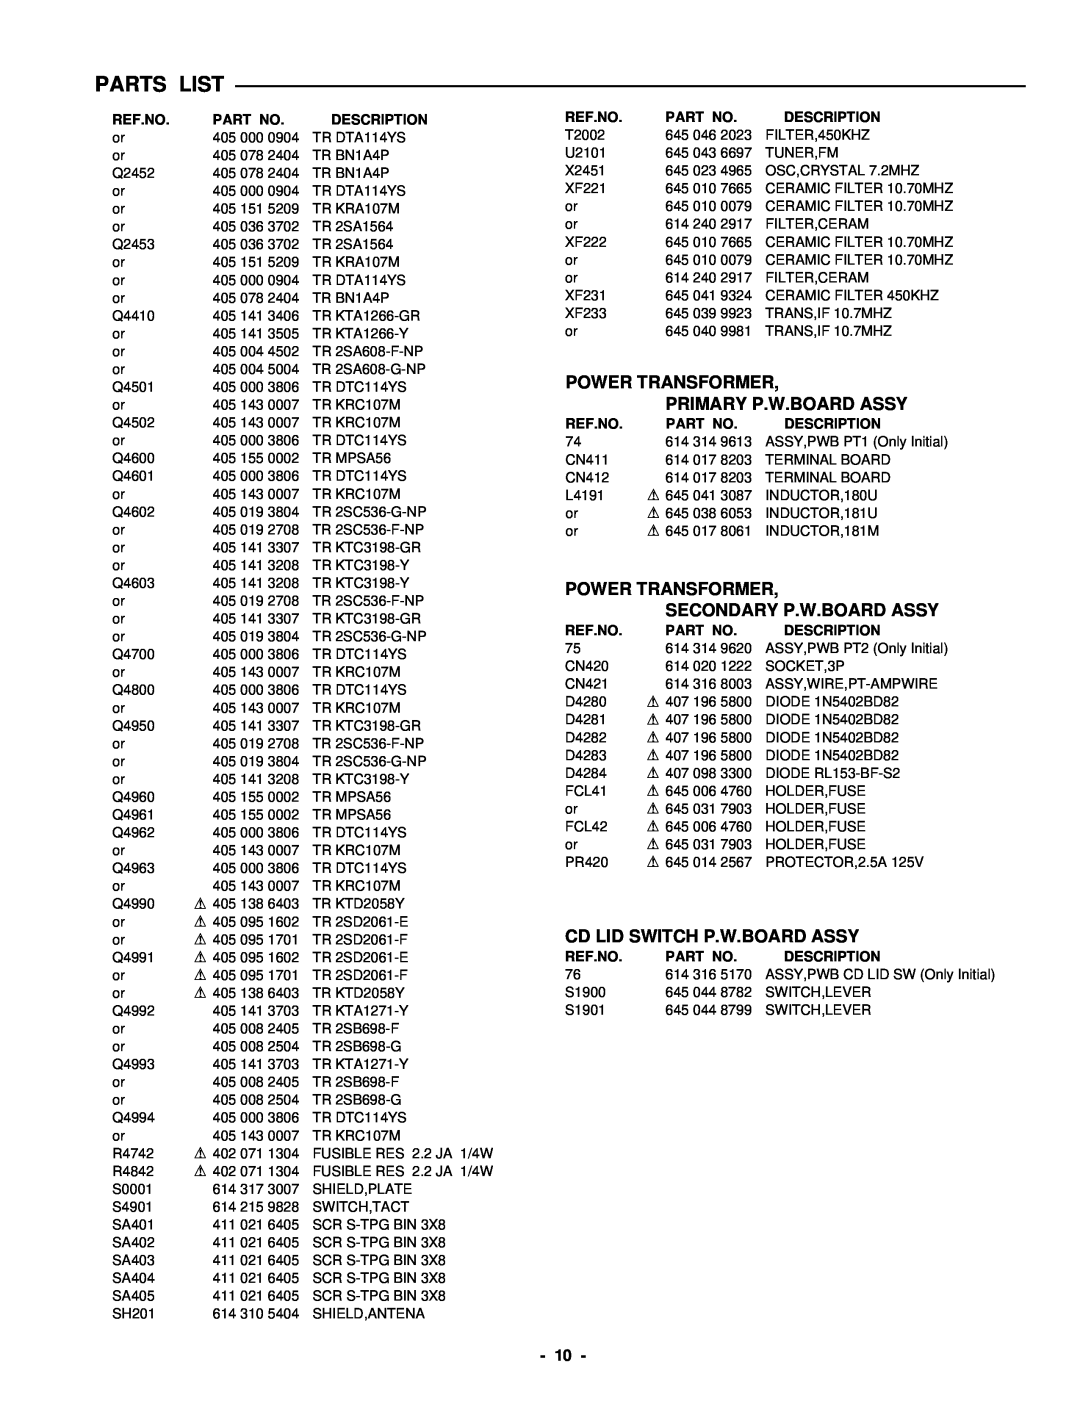 Sanyo DC-DA370 Power Transformer Primary P.W.Board Assy, Power Transformer Secondary P.W.Board Assy, Parts List 